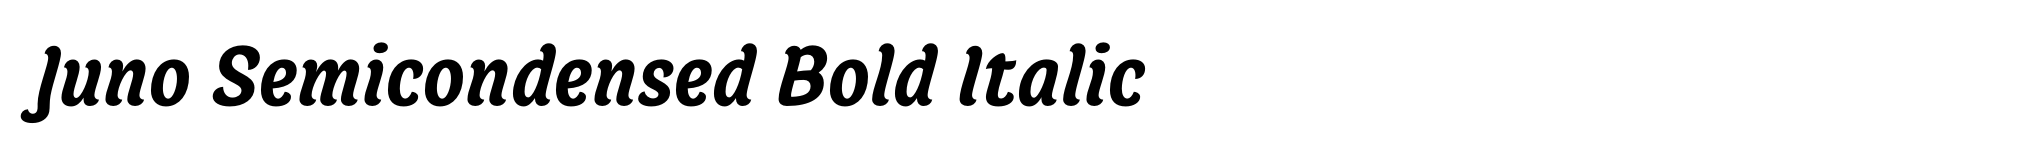 Juno Semicondensed Bold Italic image